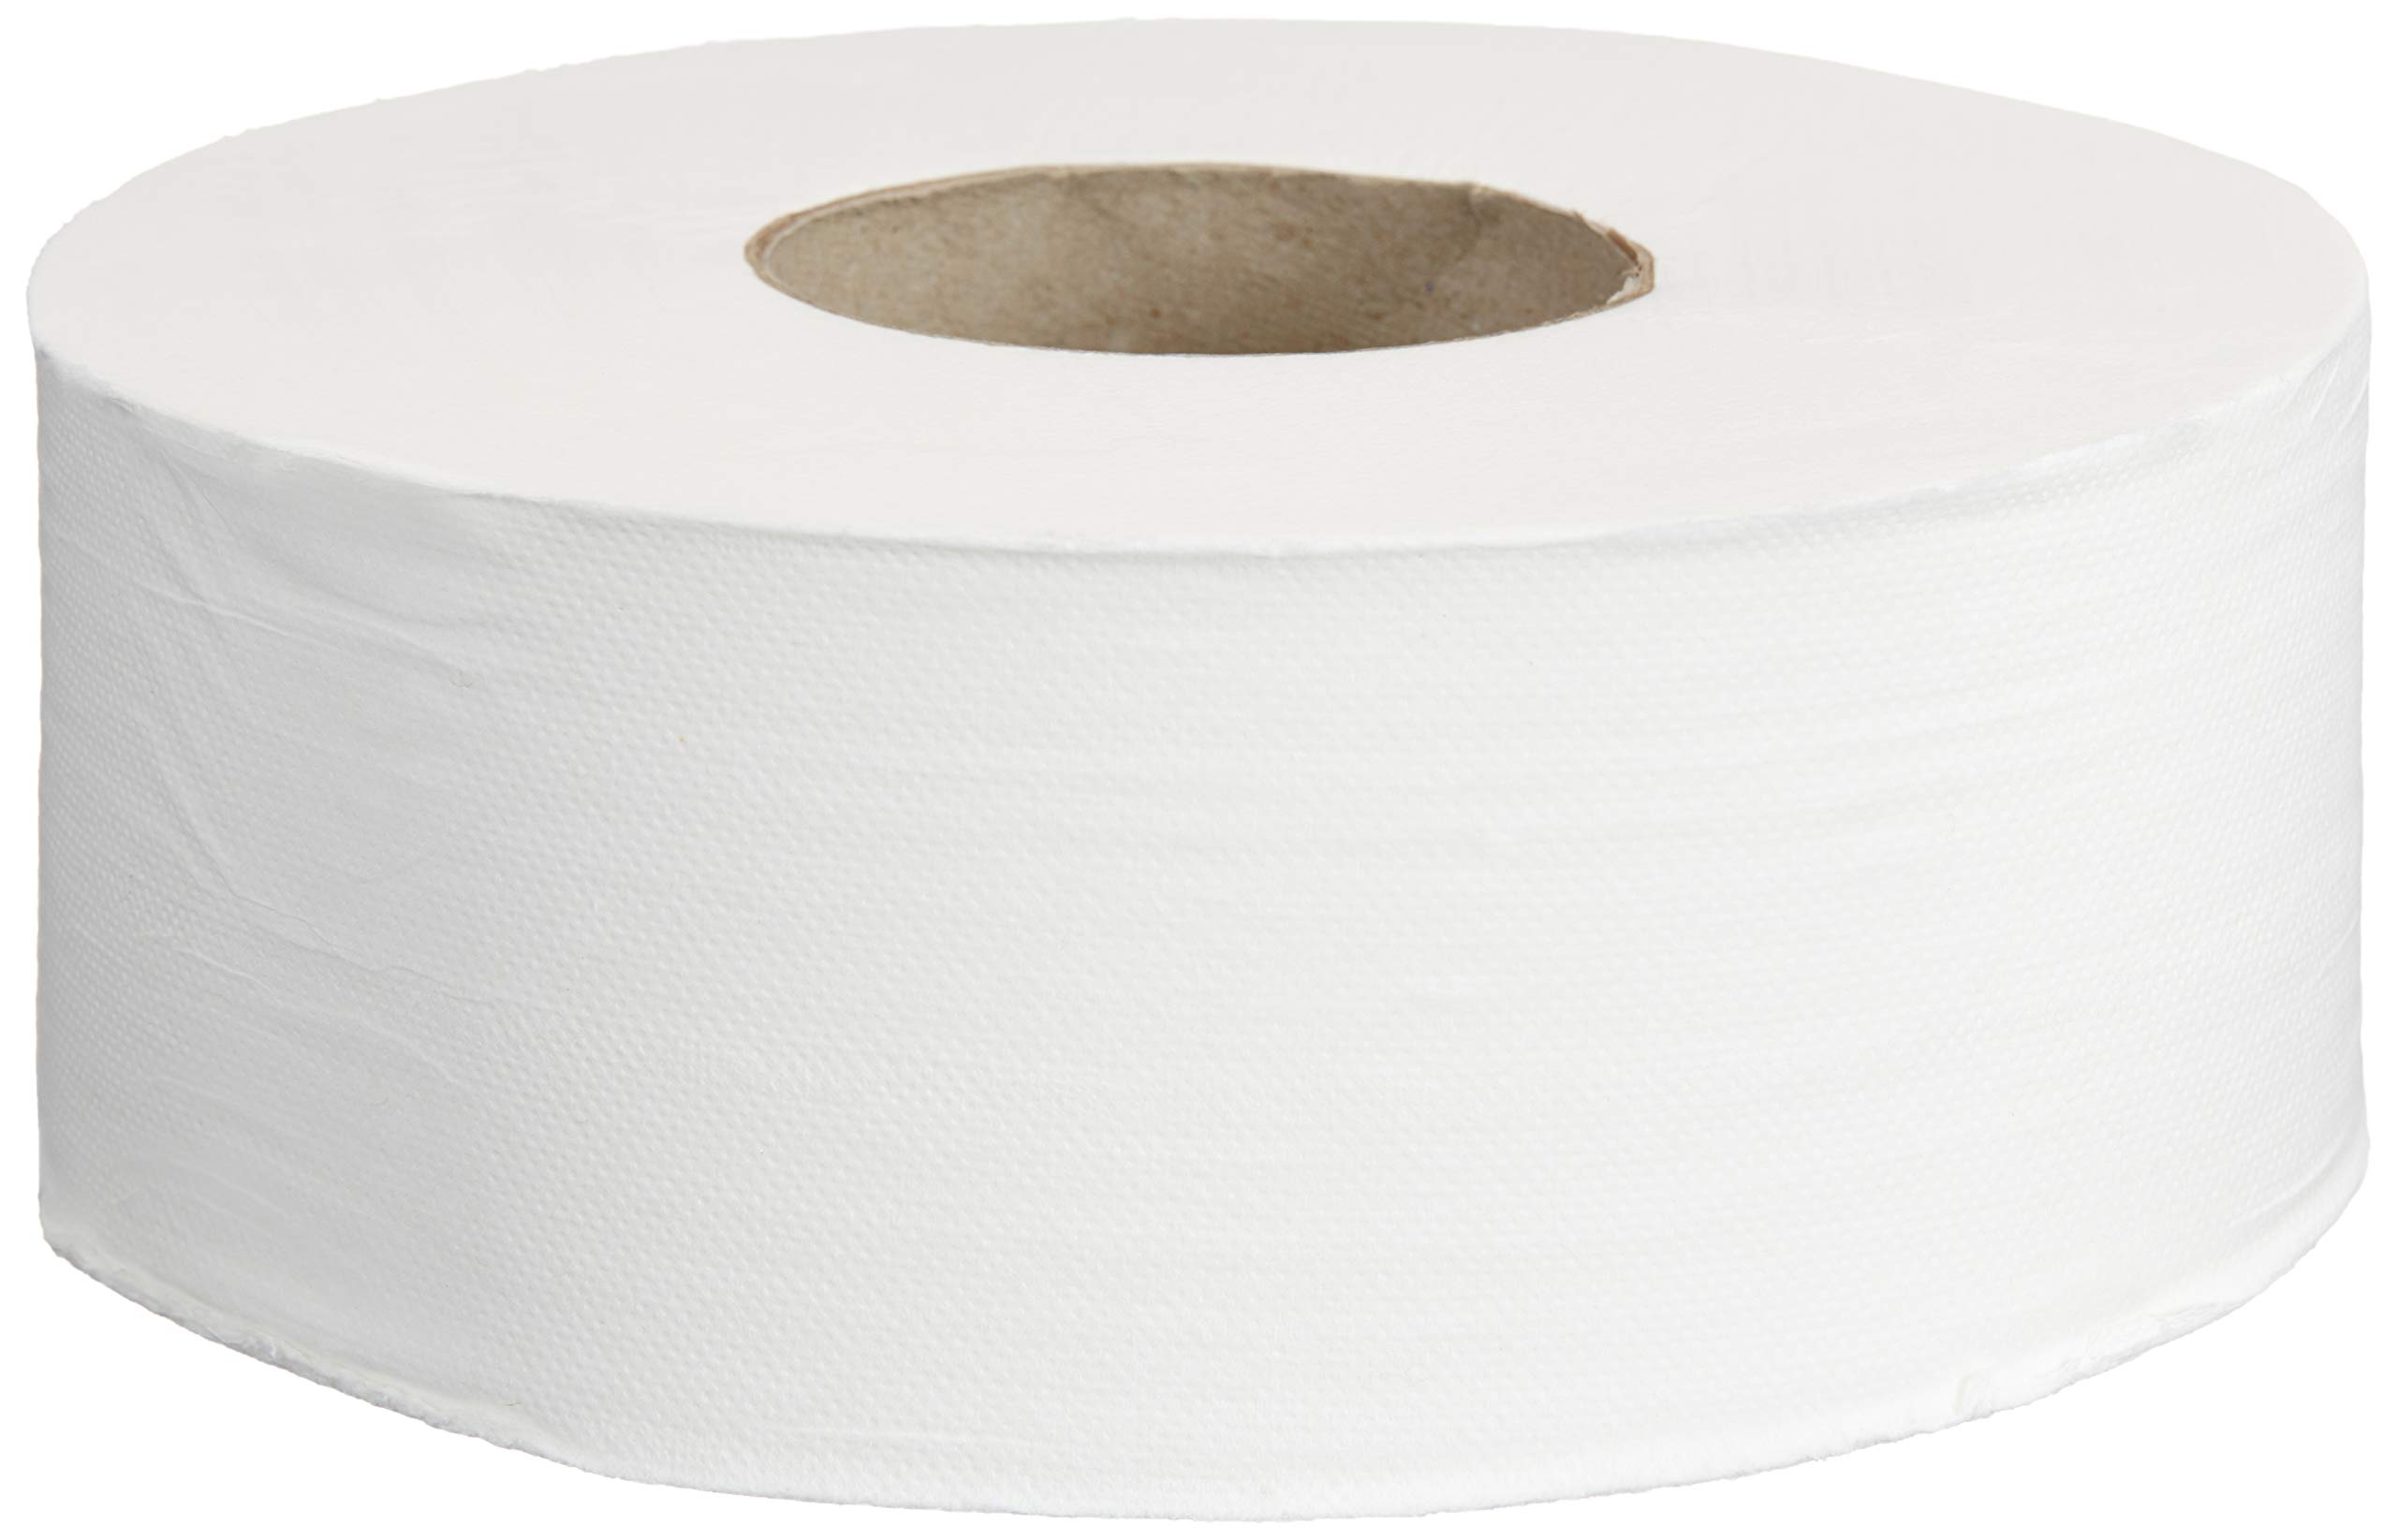 AMONG US con rollos de papel higiénico., AMONG US with toilet rolls.